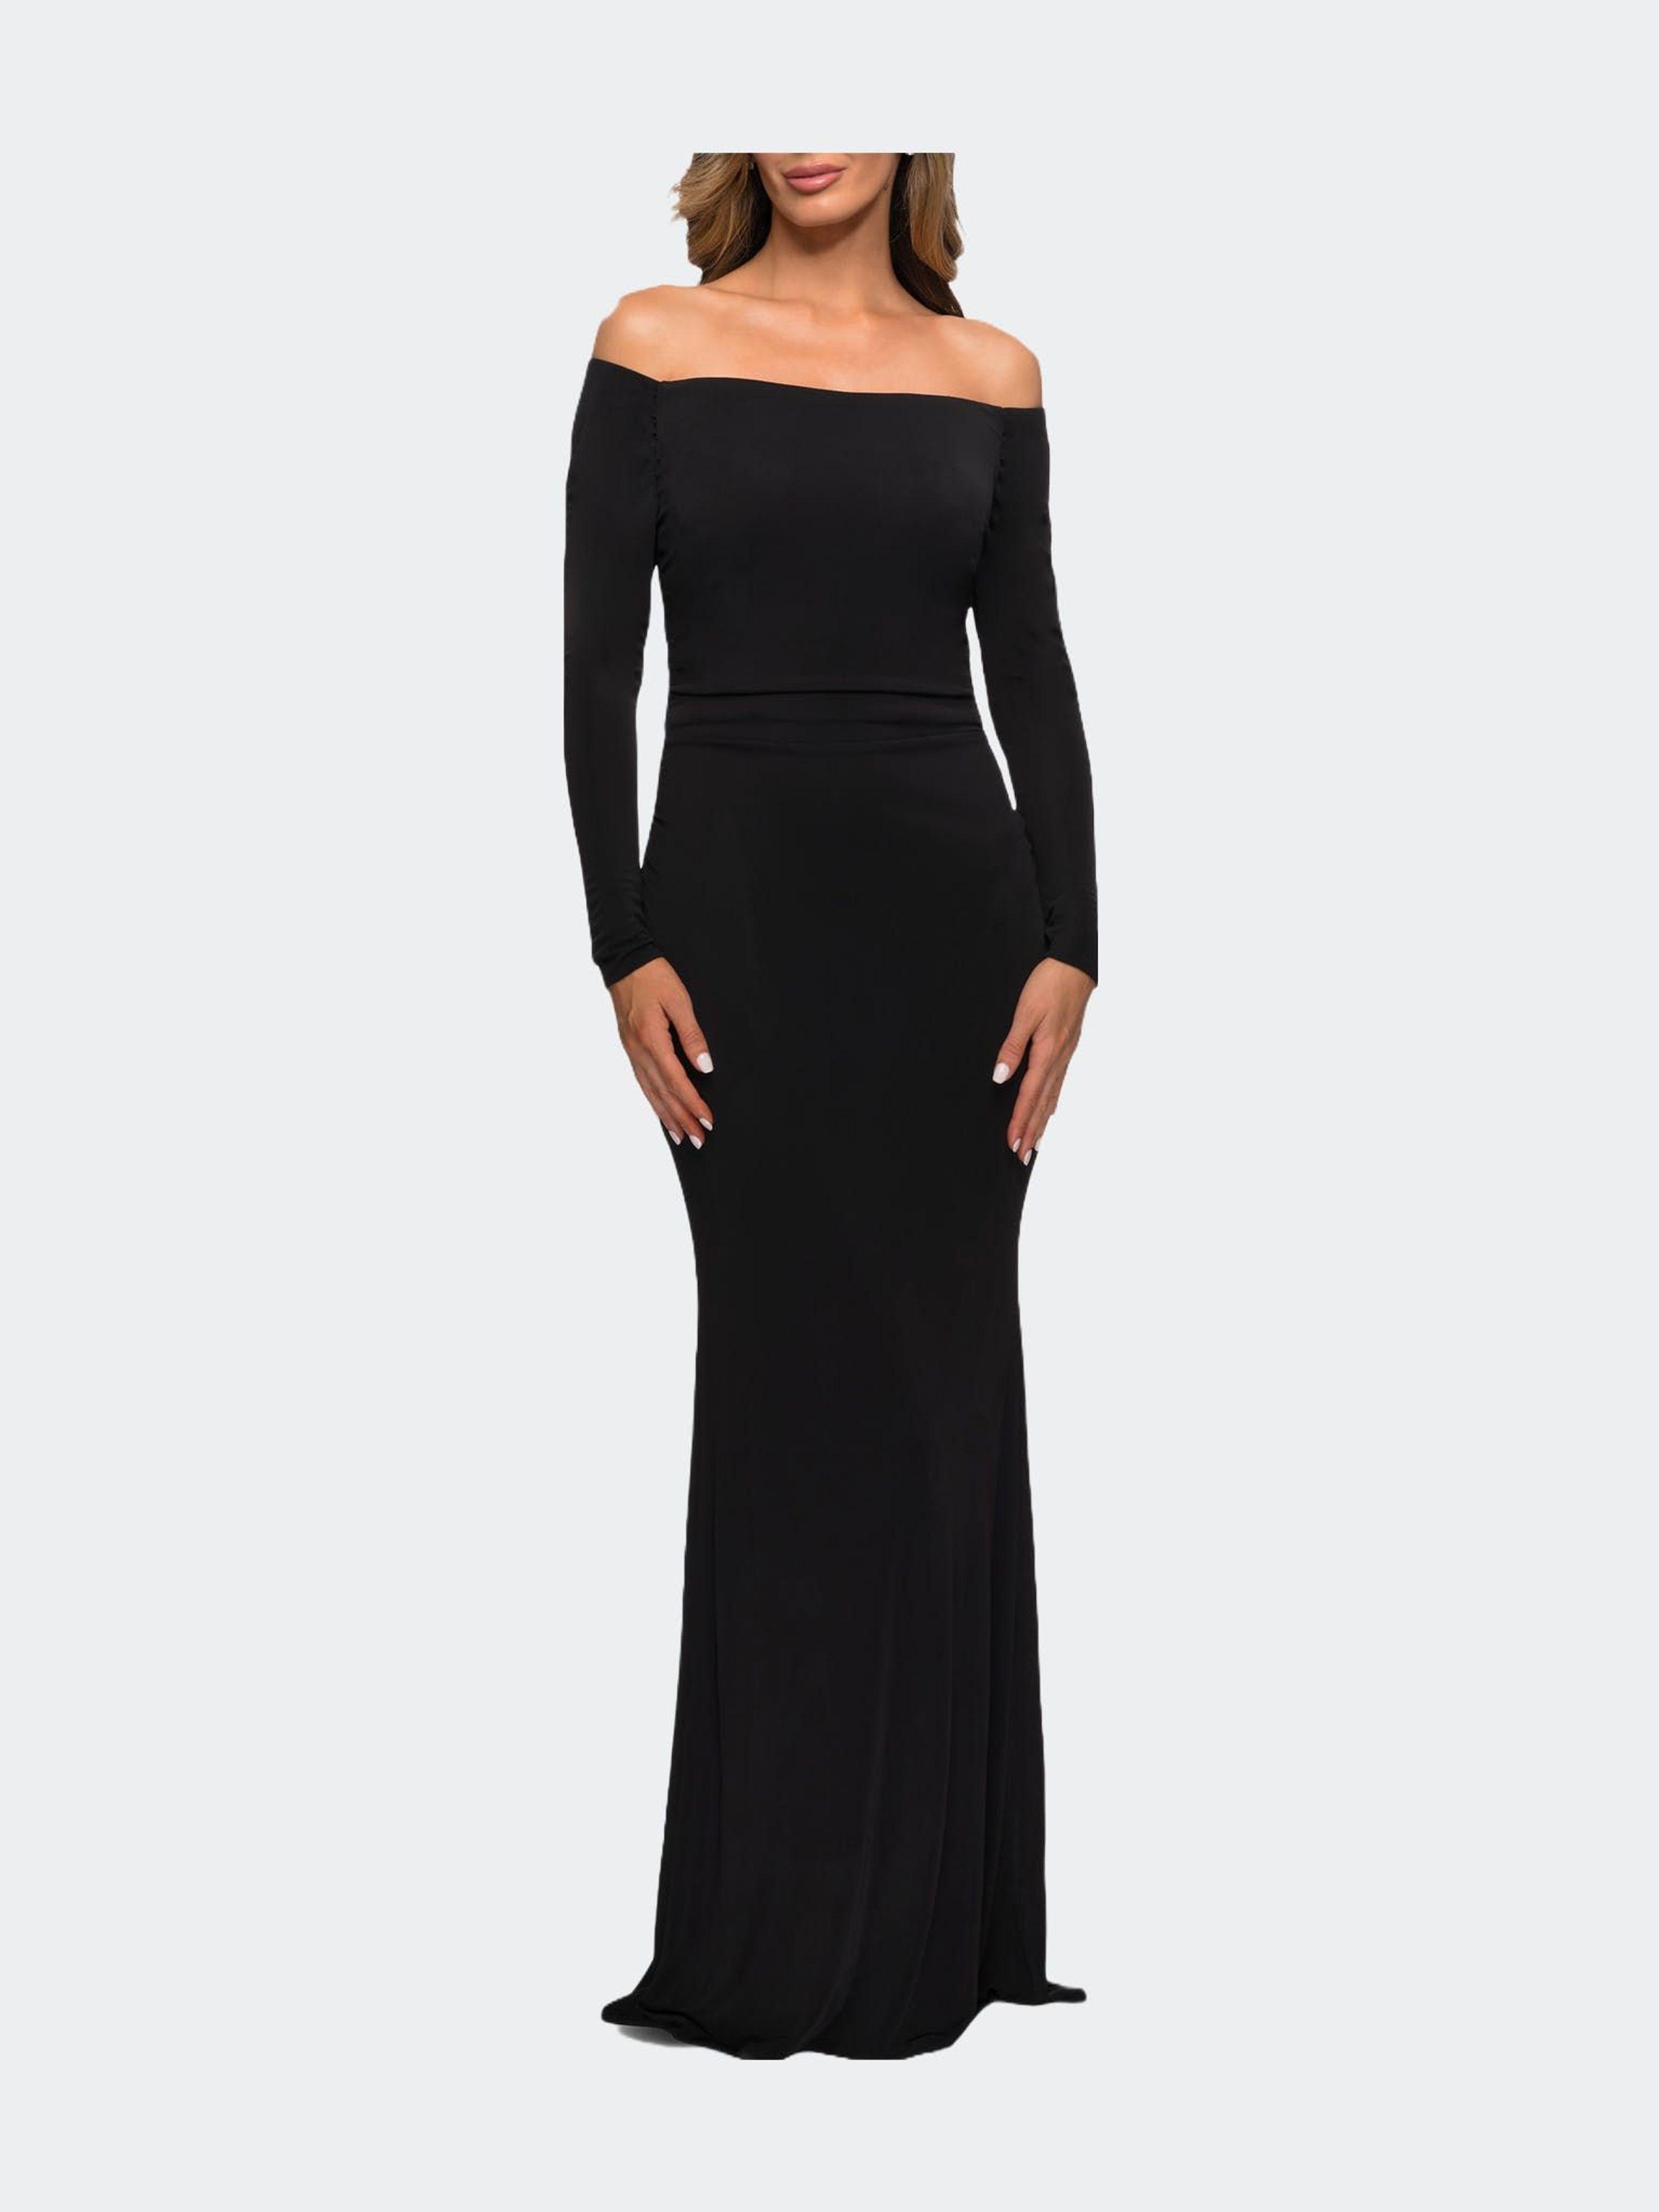 La Femme Long Sleeve Off The Shoulder Jersey Evening Gown in Black | Lyst